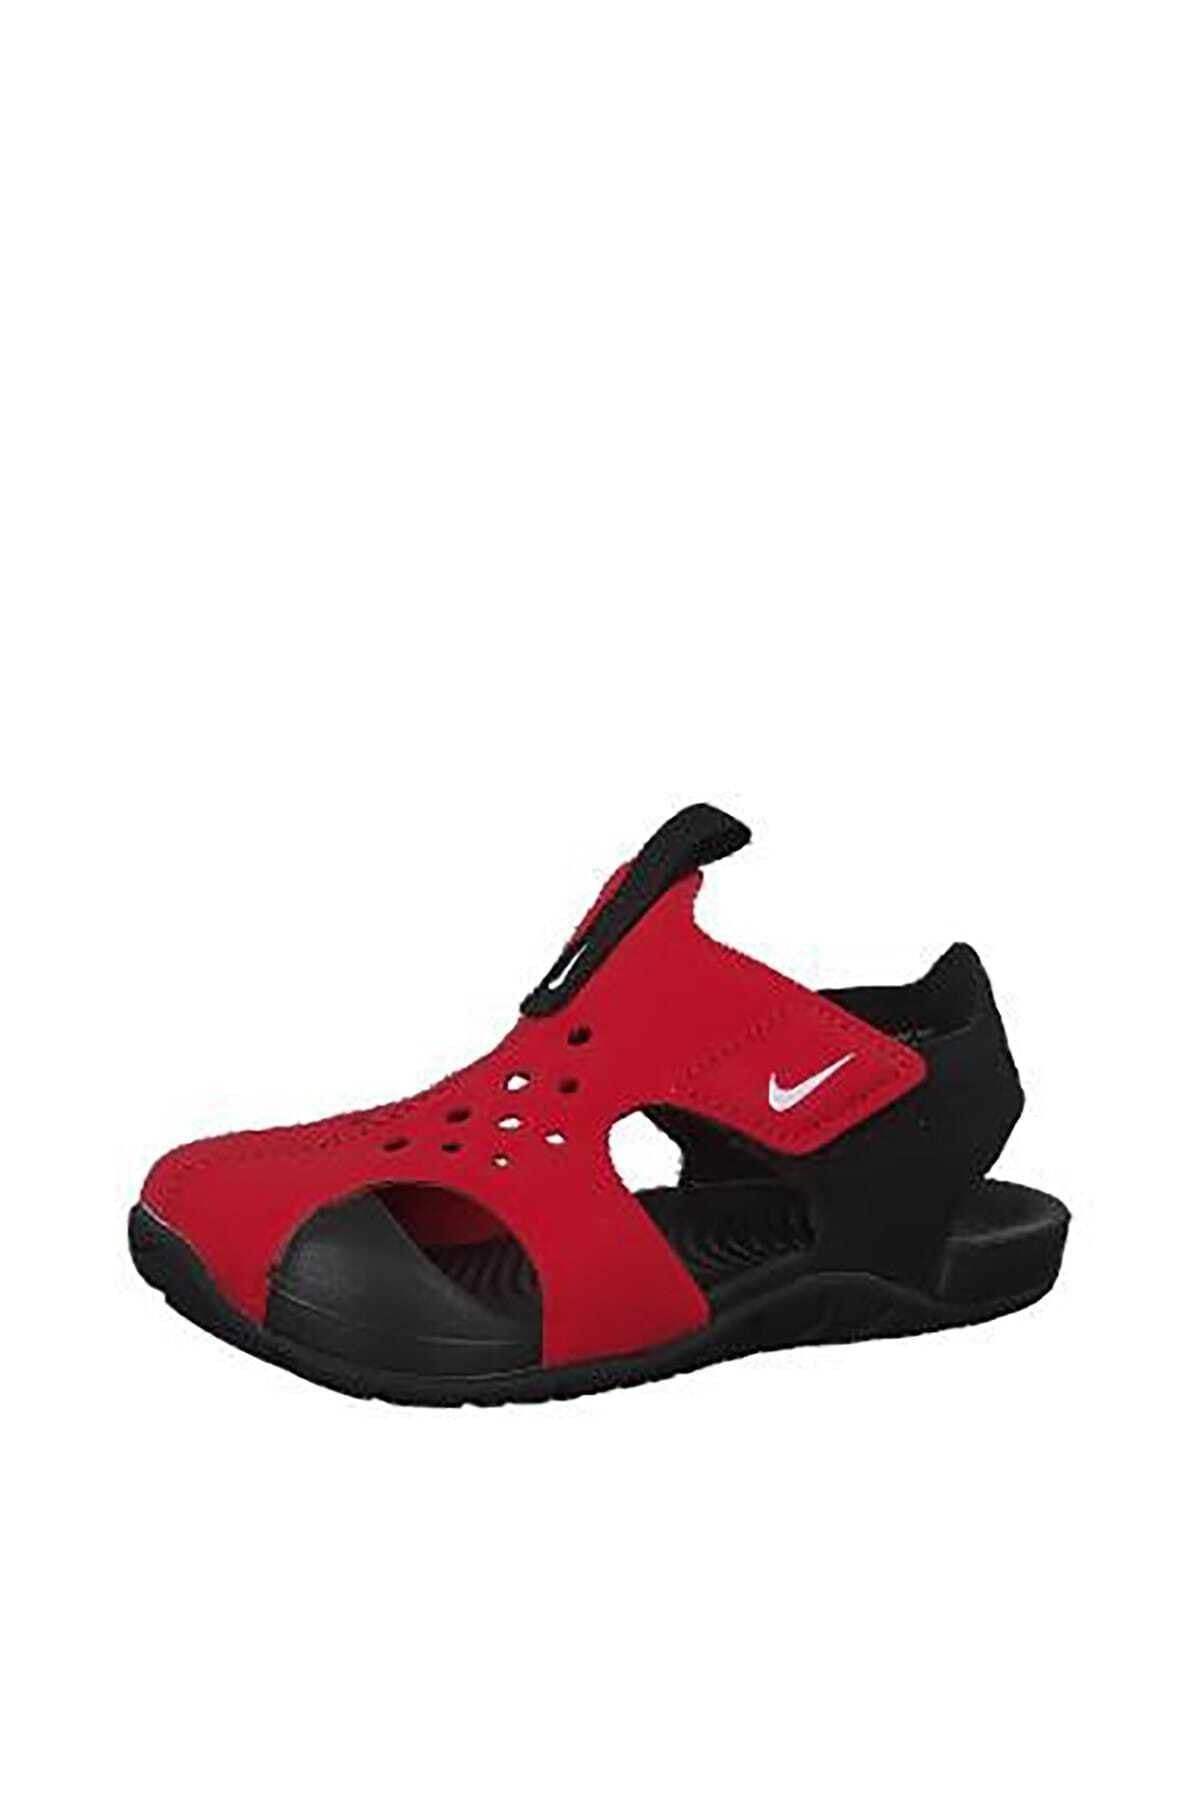 Nike کودک قرمز 943827-601 Sunray Protect Sandals